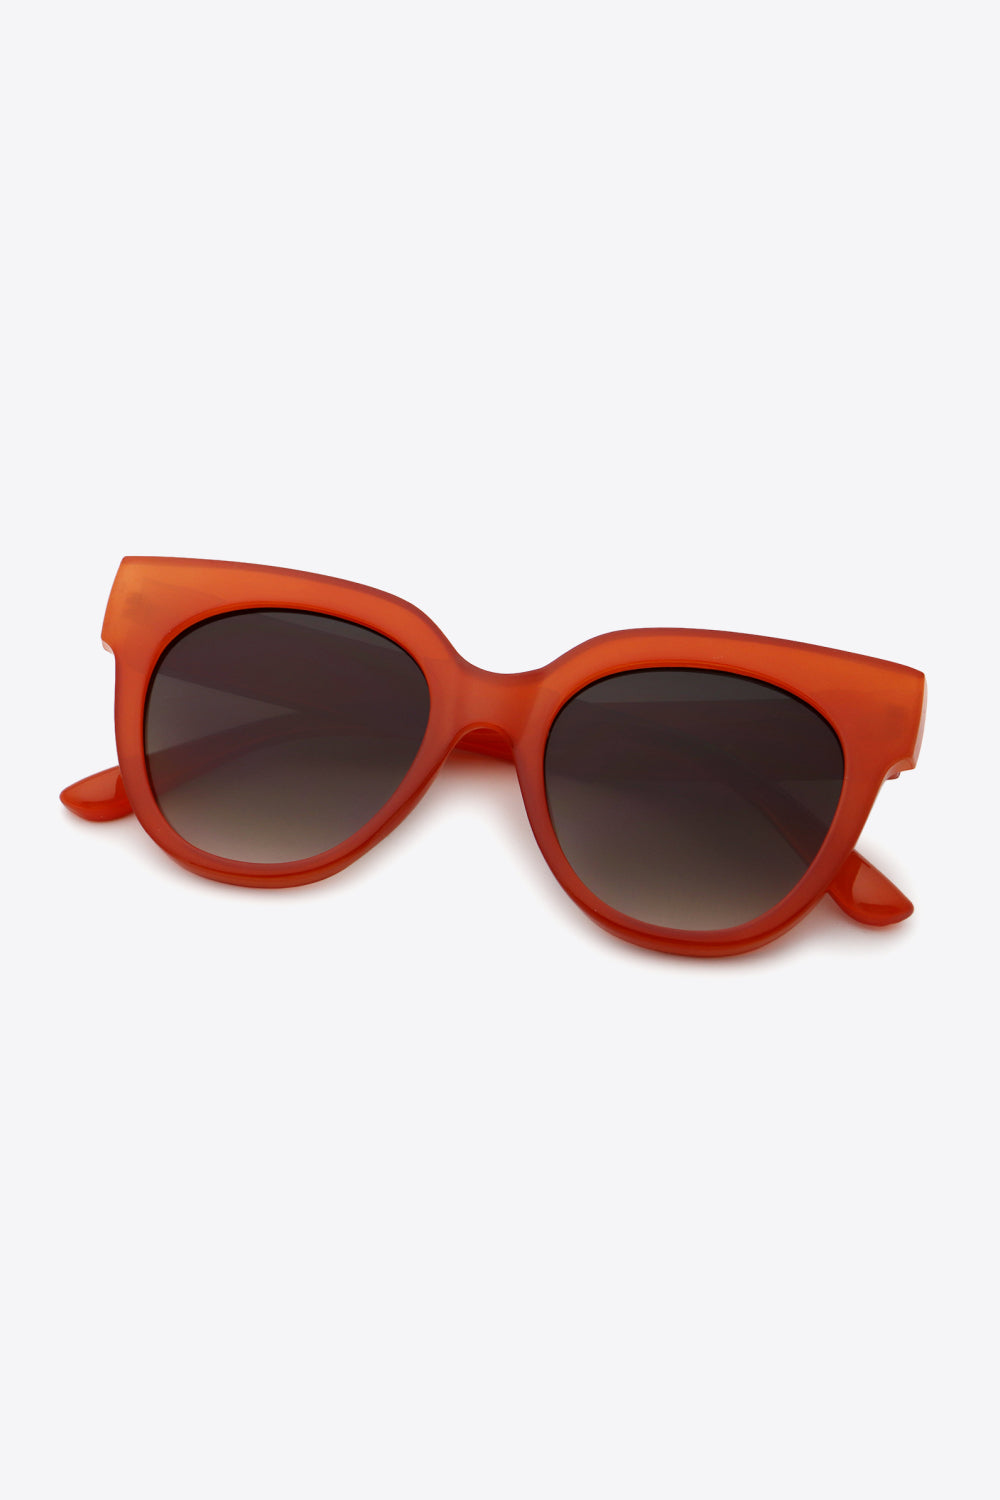 Eyes on Fire UV400 Polycarbonate Round Sunglasses